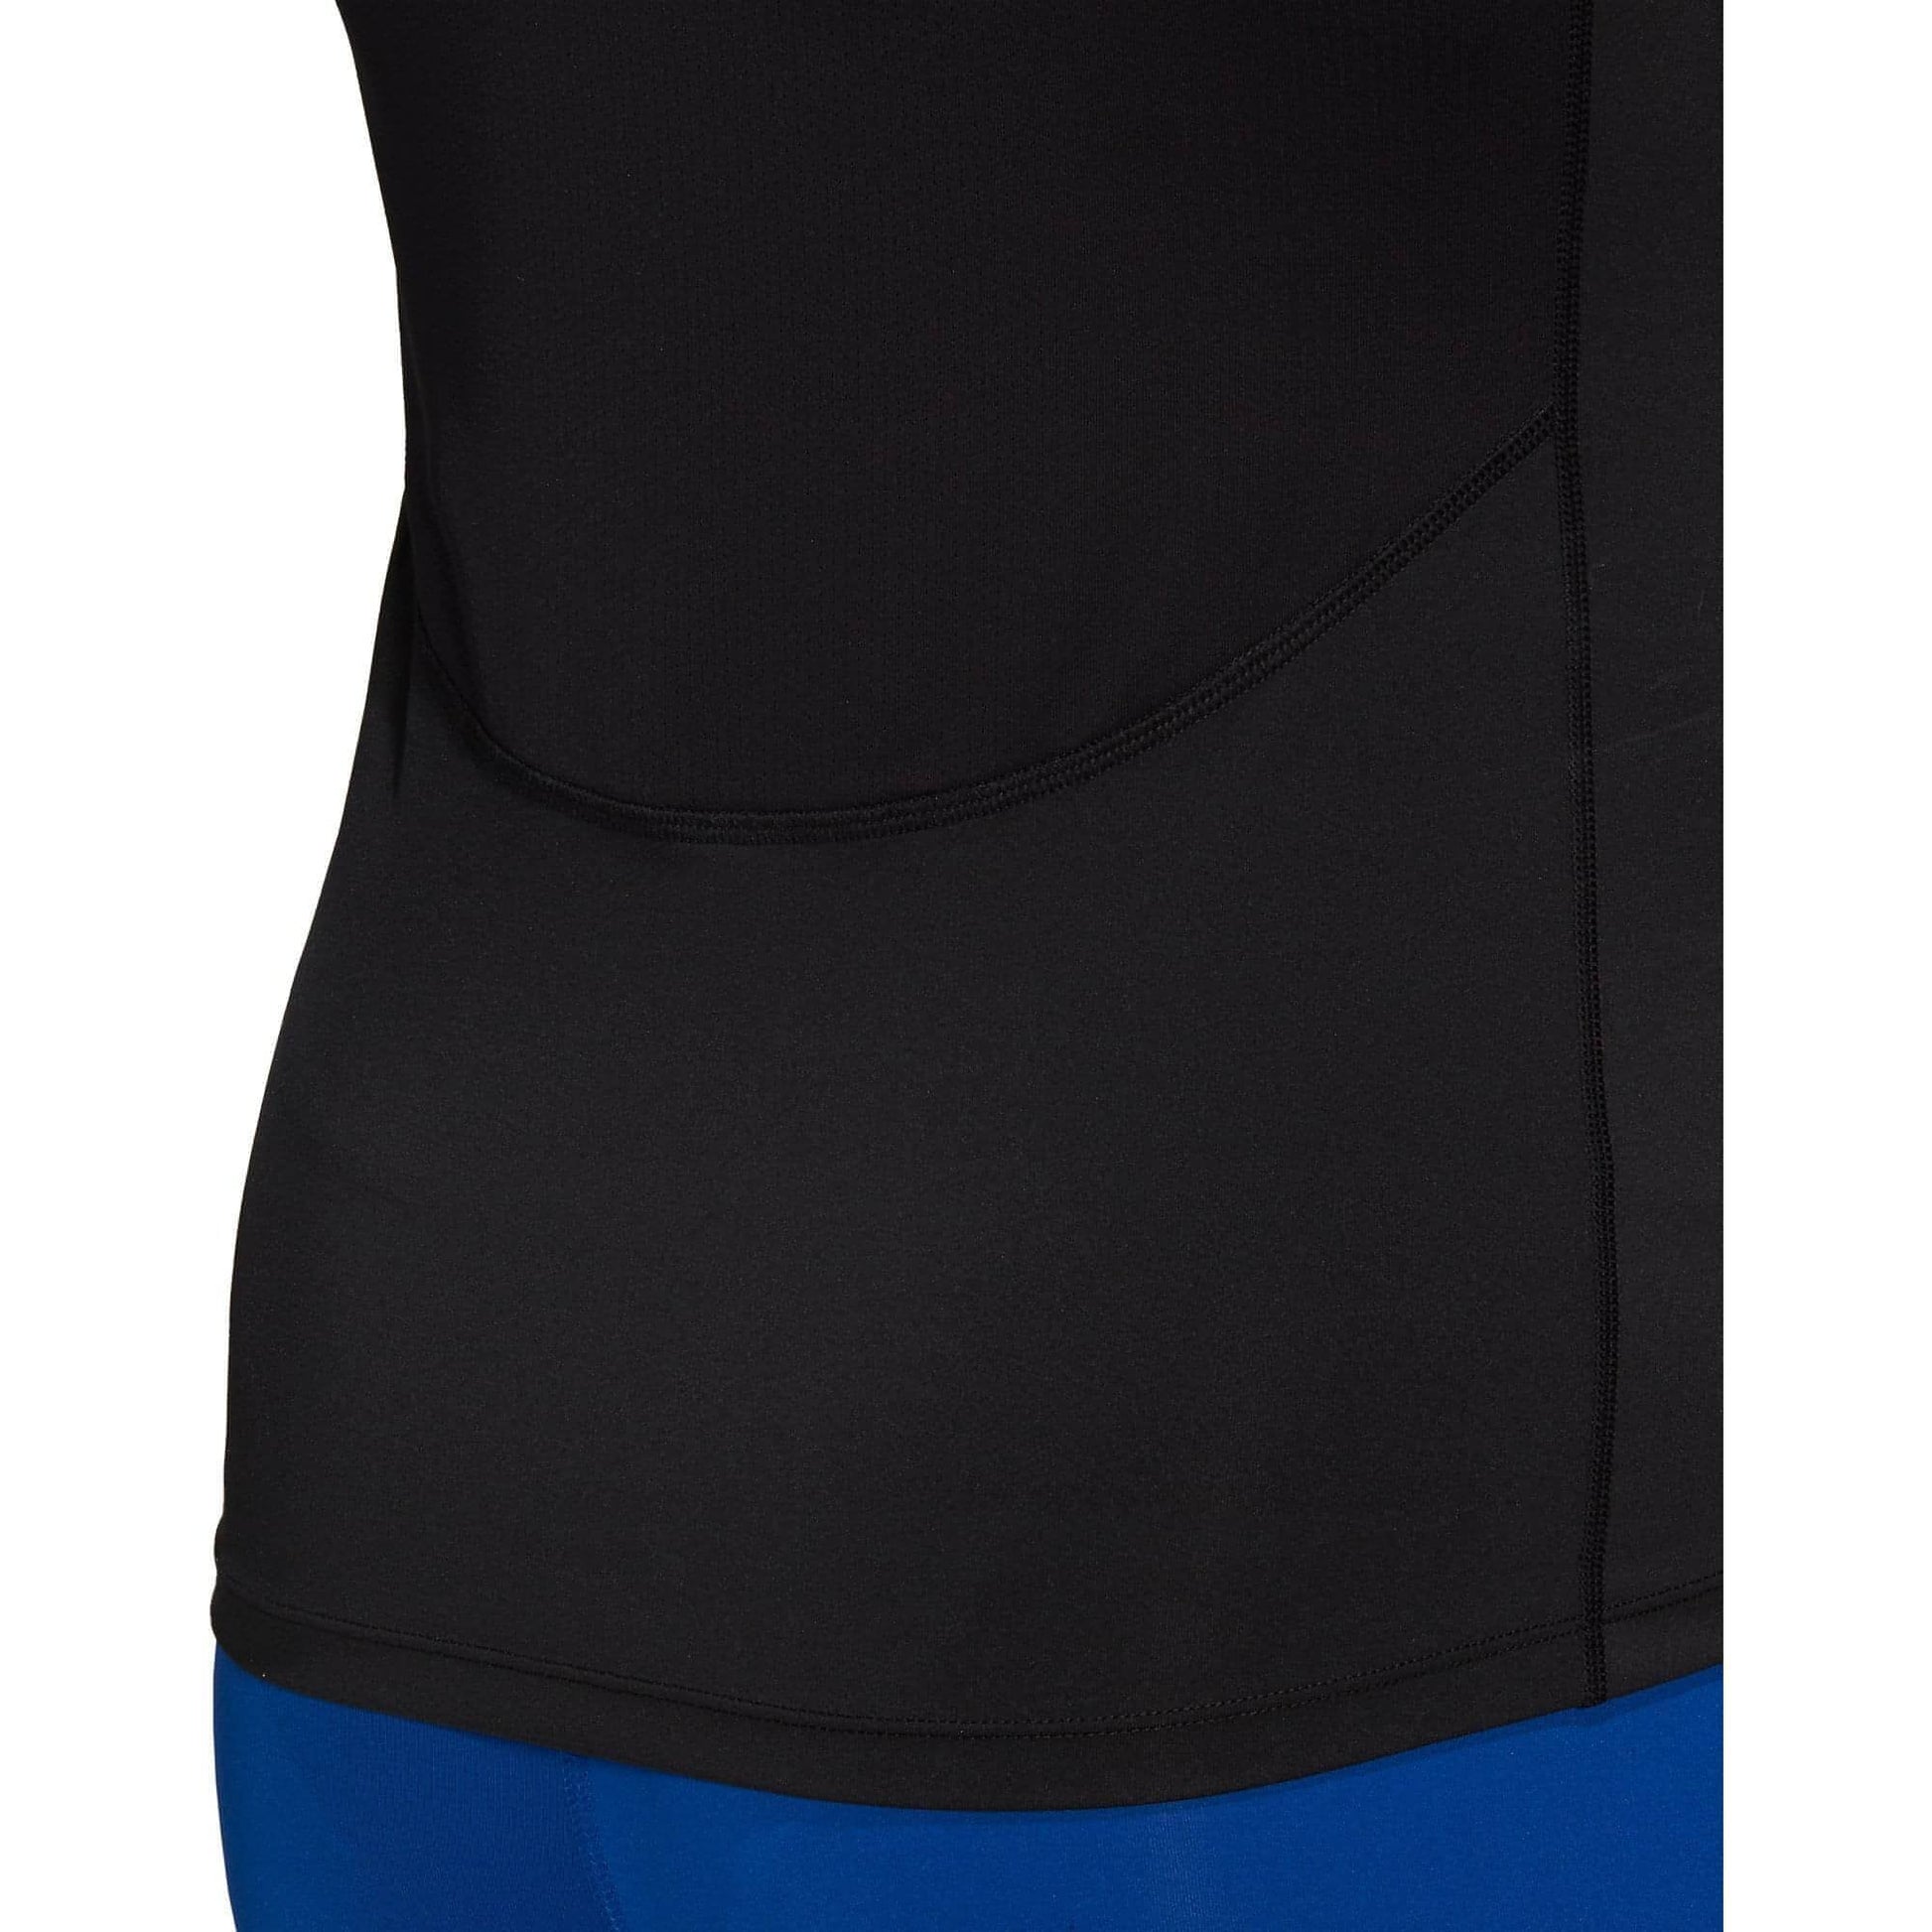 Adidas Tech Fit Short Sleeve Hk2337 Details